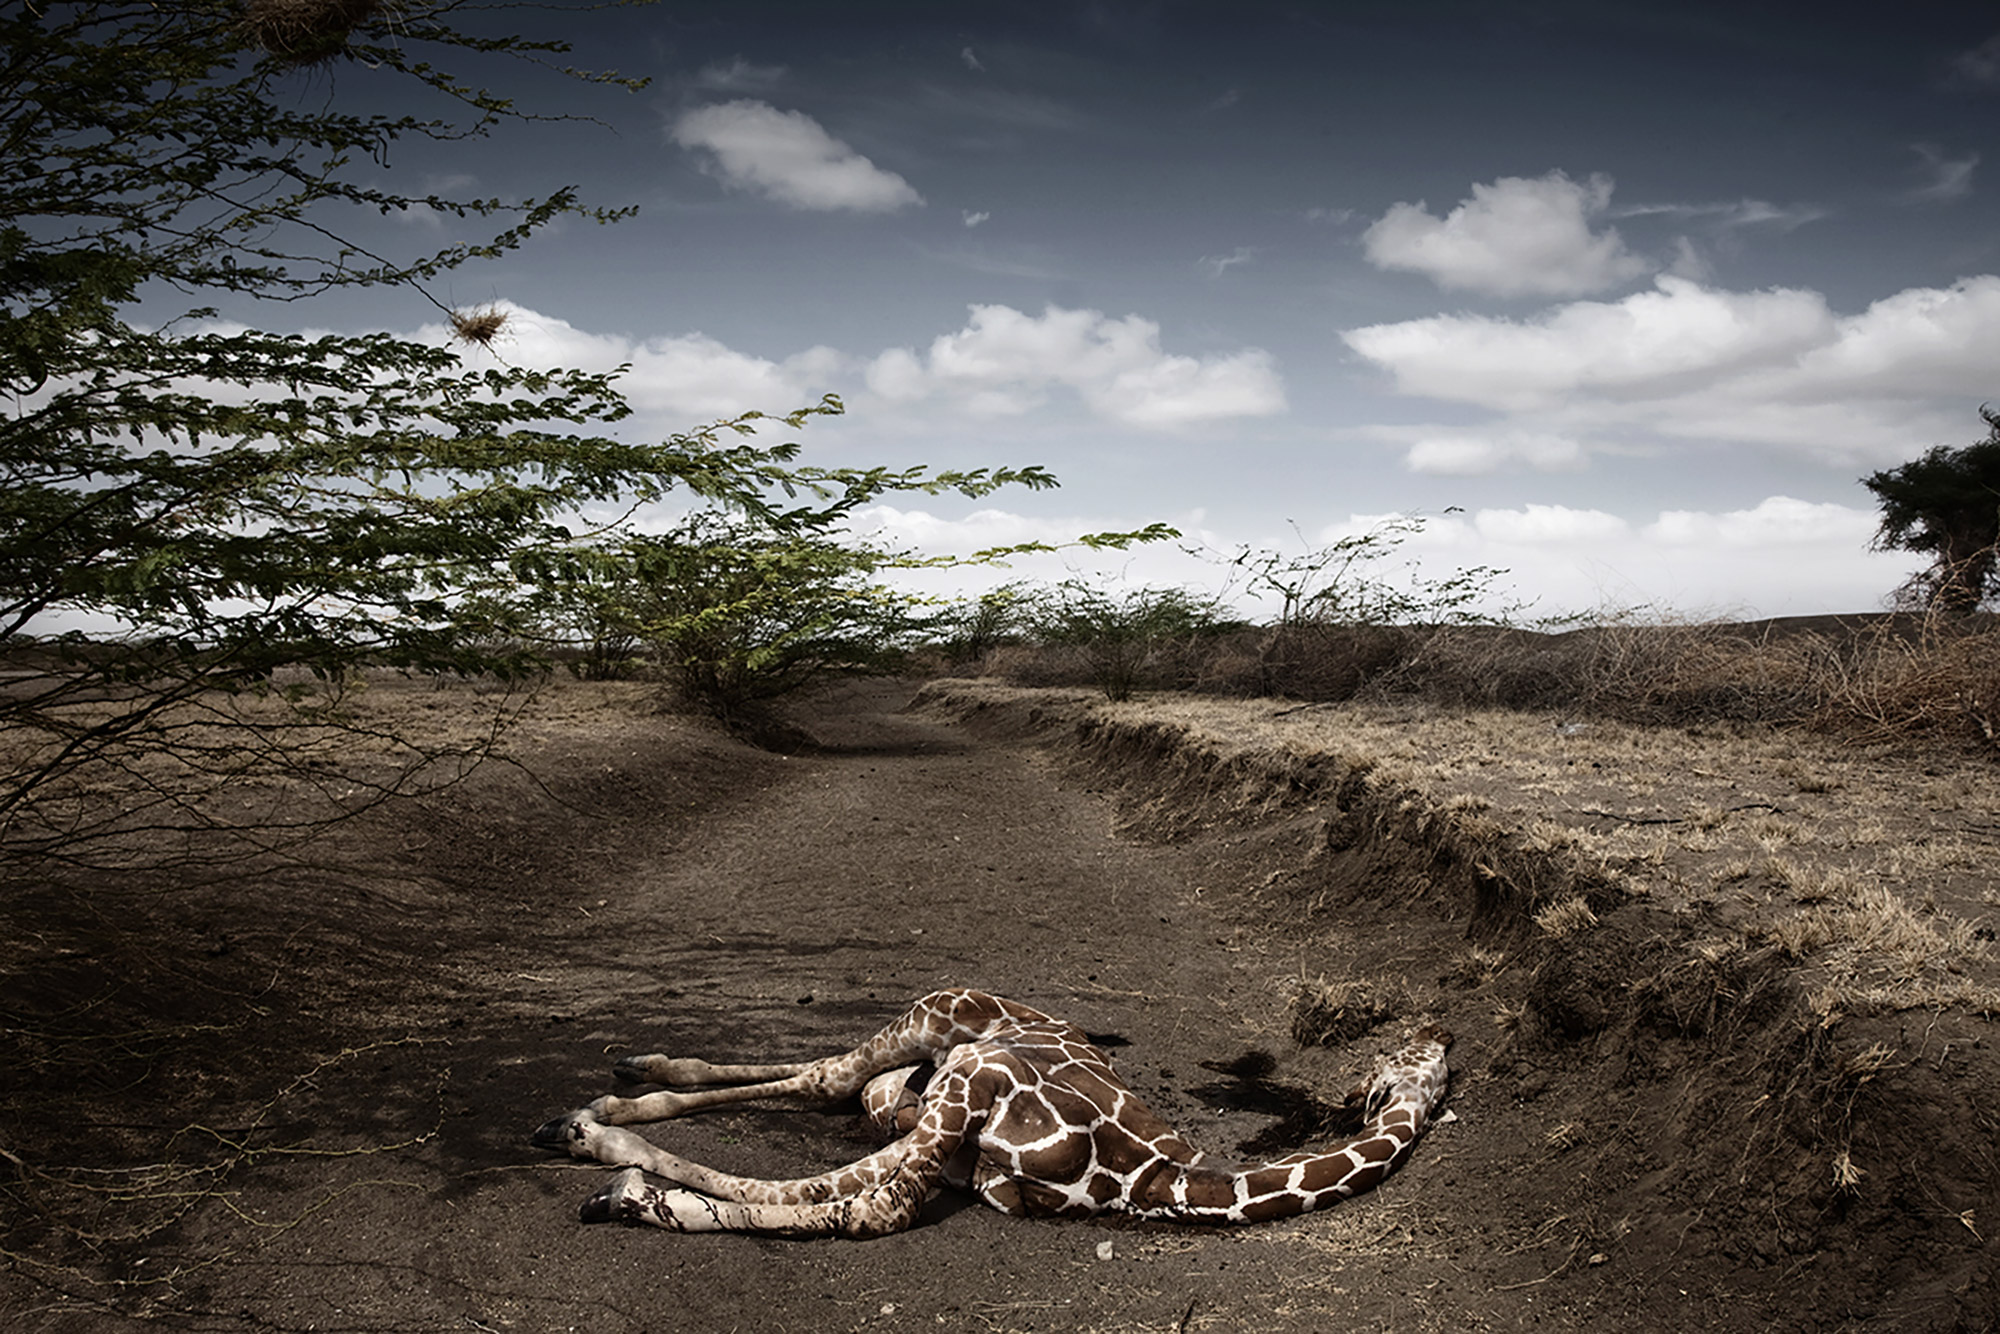 Giraffe killed by the draught in WAJIR area, in the northeastern province, Kenya, October 2009. ©Stefano De Luigi / VII